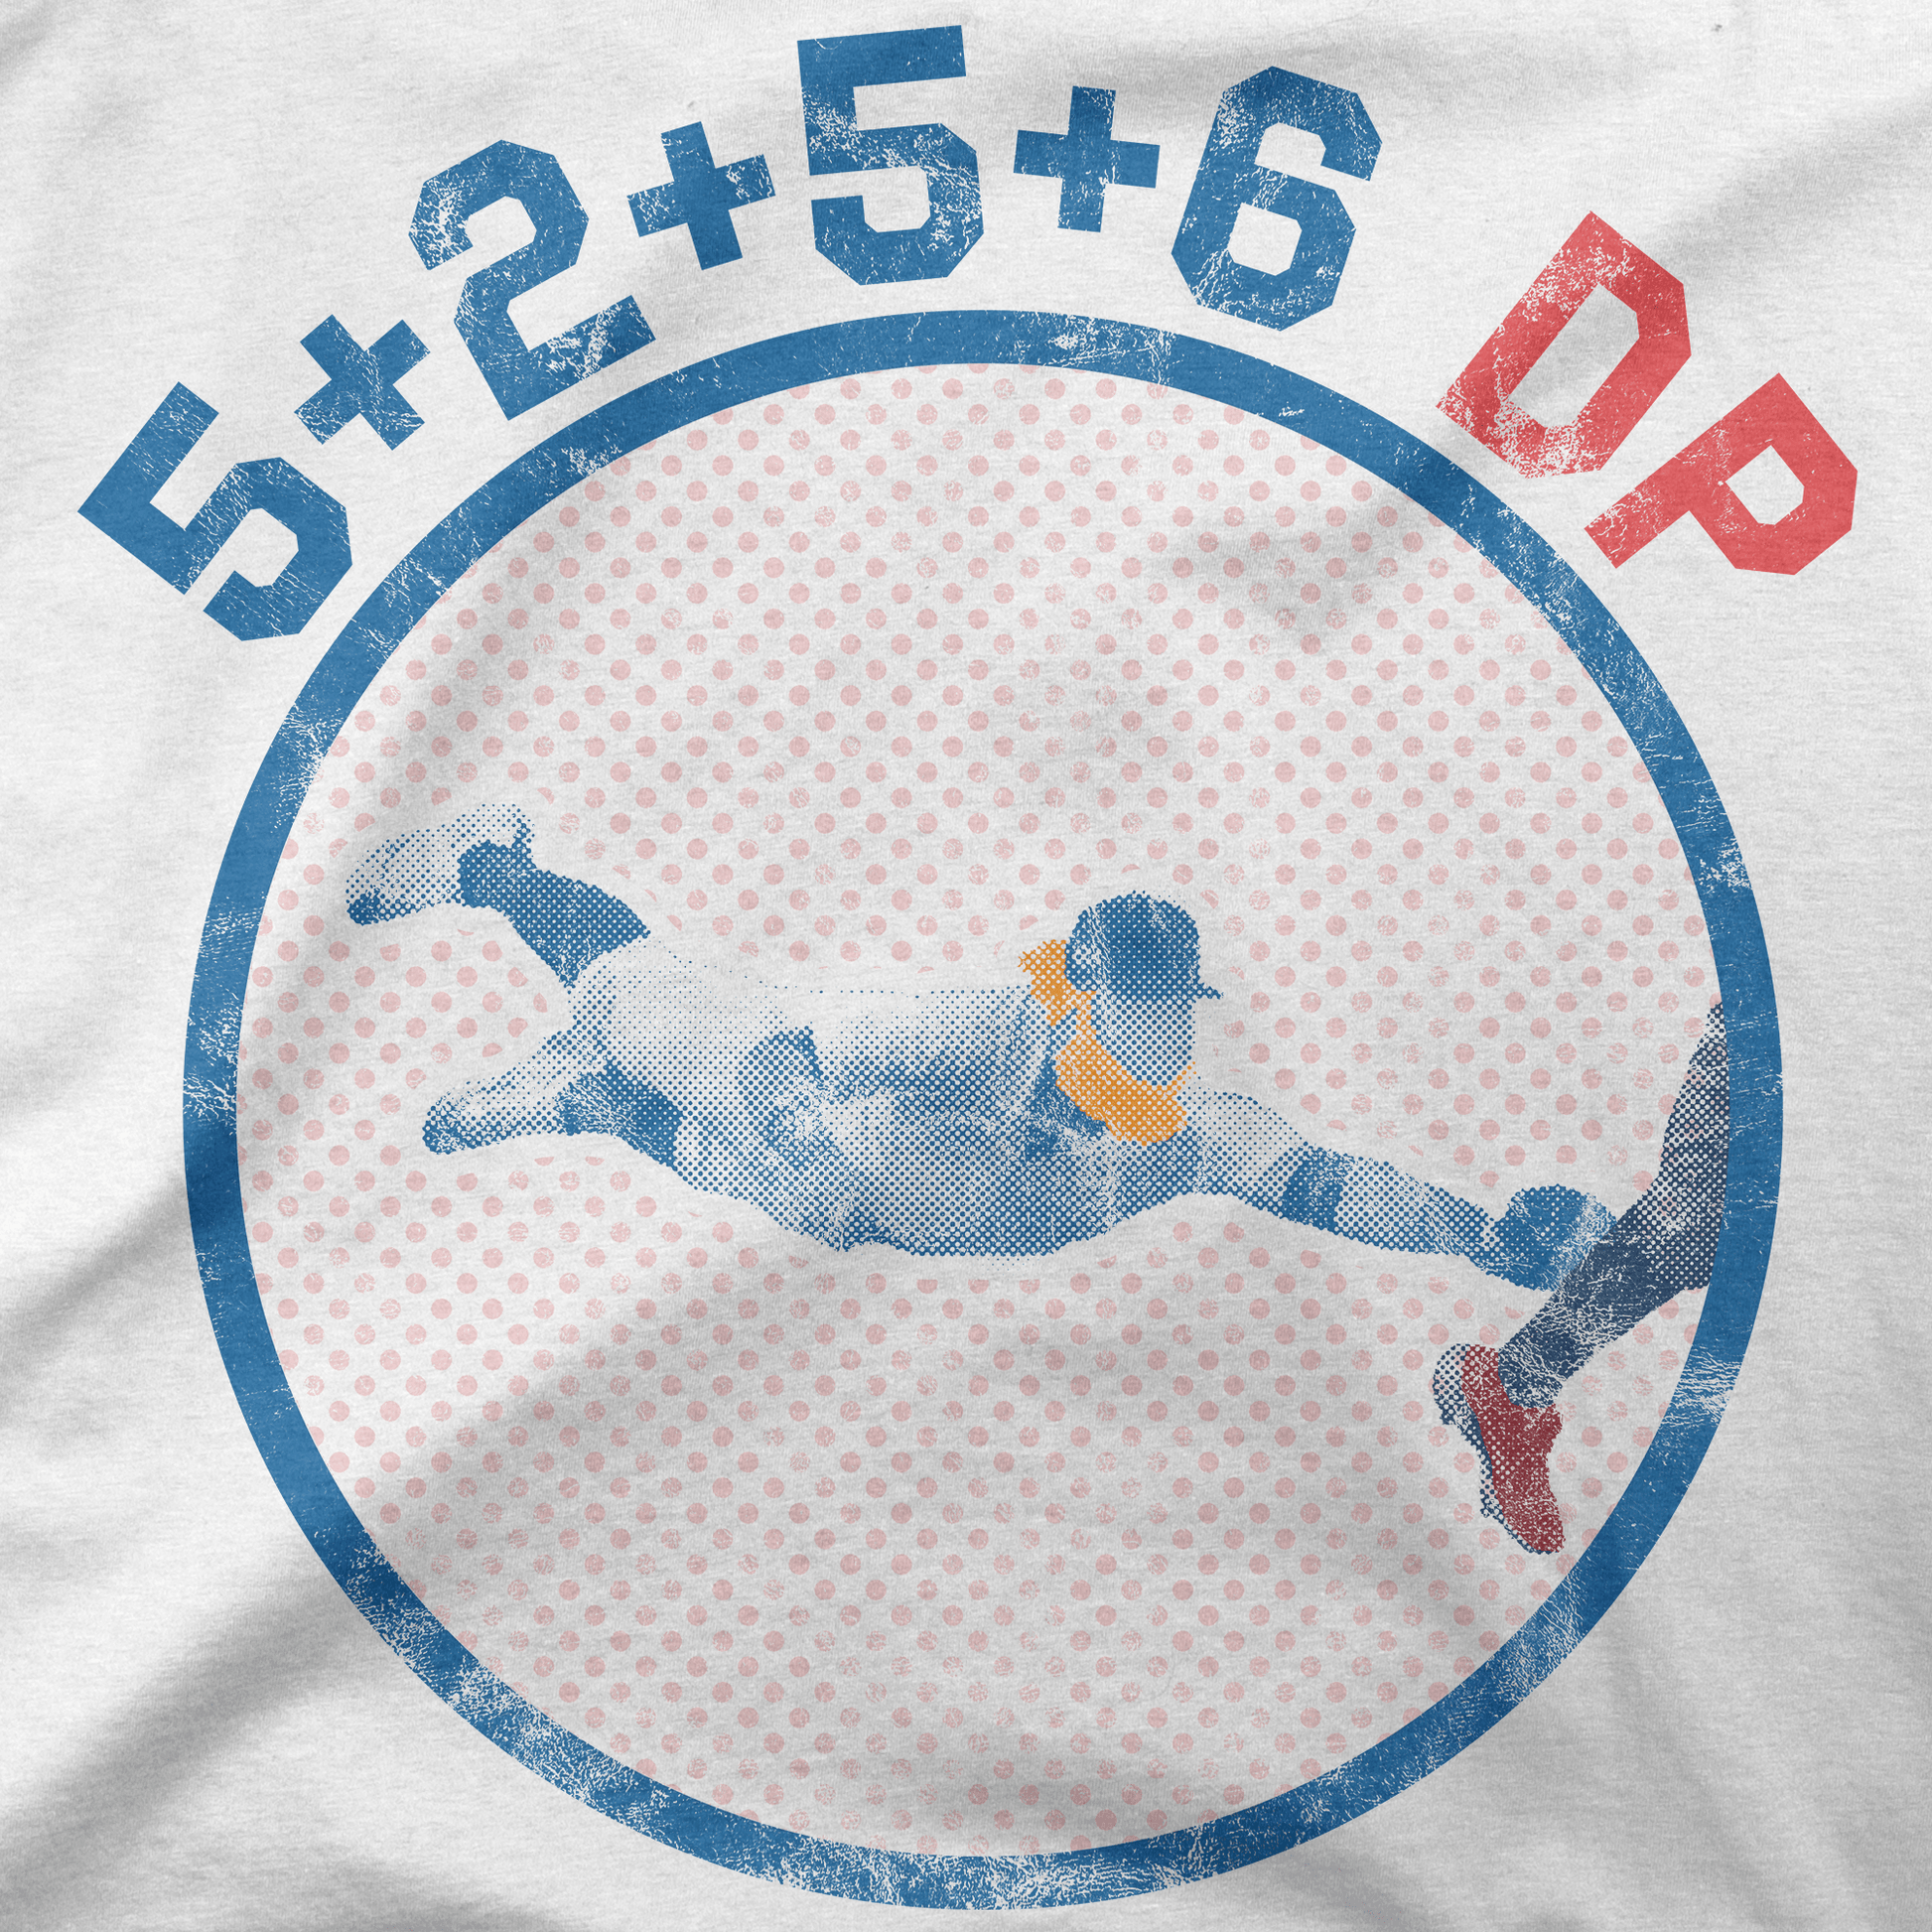 5+2+5+6 DP | T-Shirt - Jomboy Media